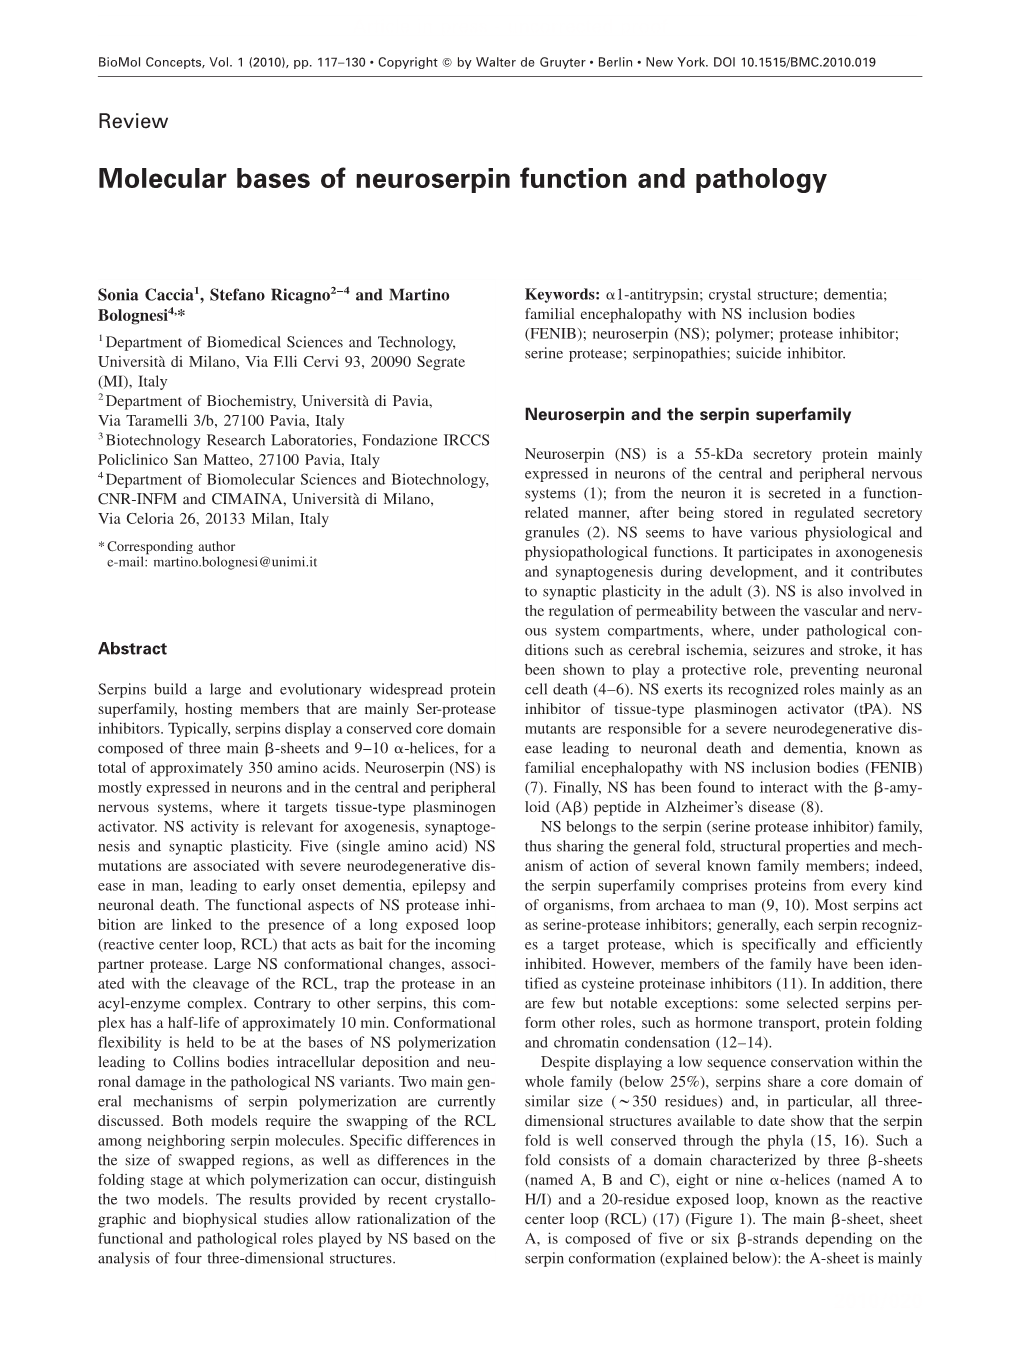 Molecular Bases of Neuroserpin Function and Pathology